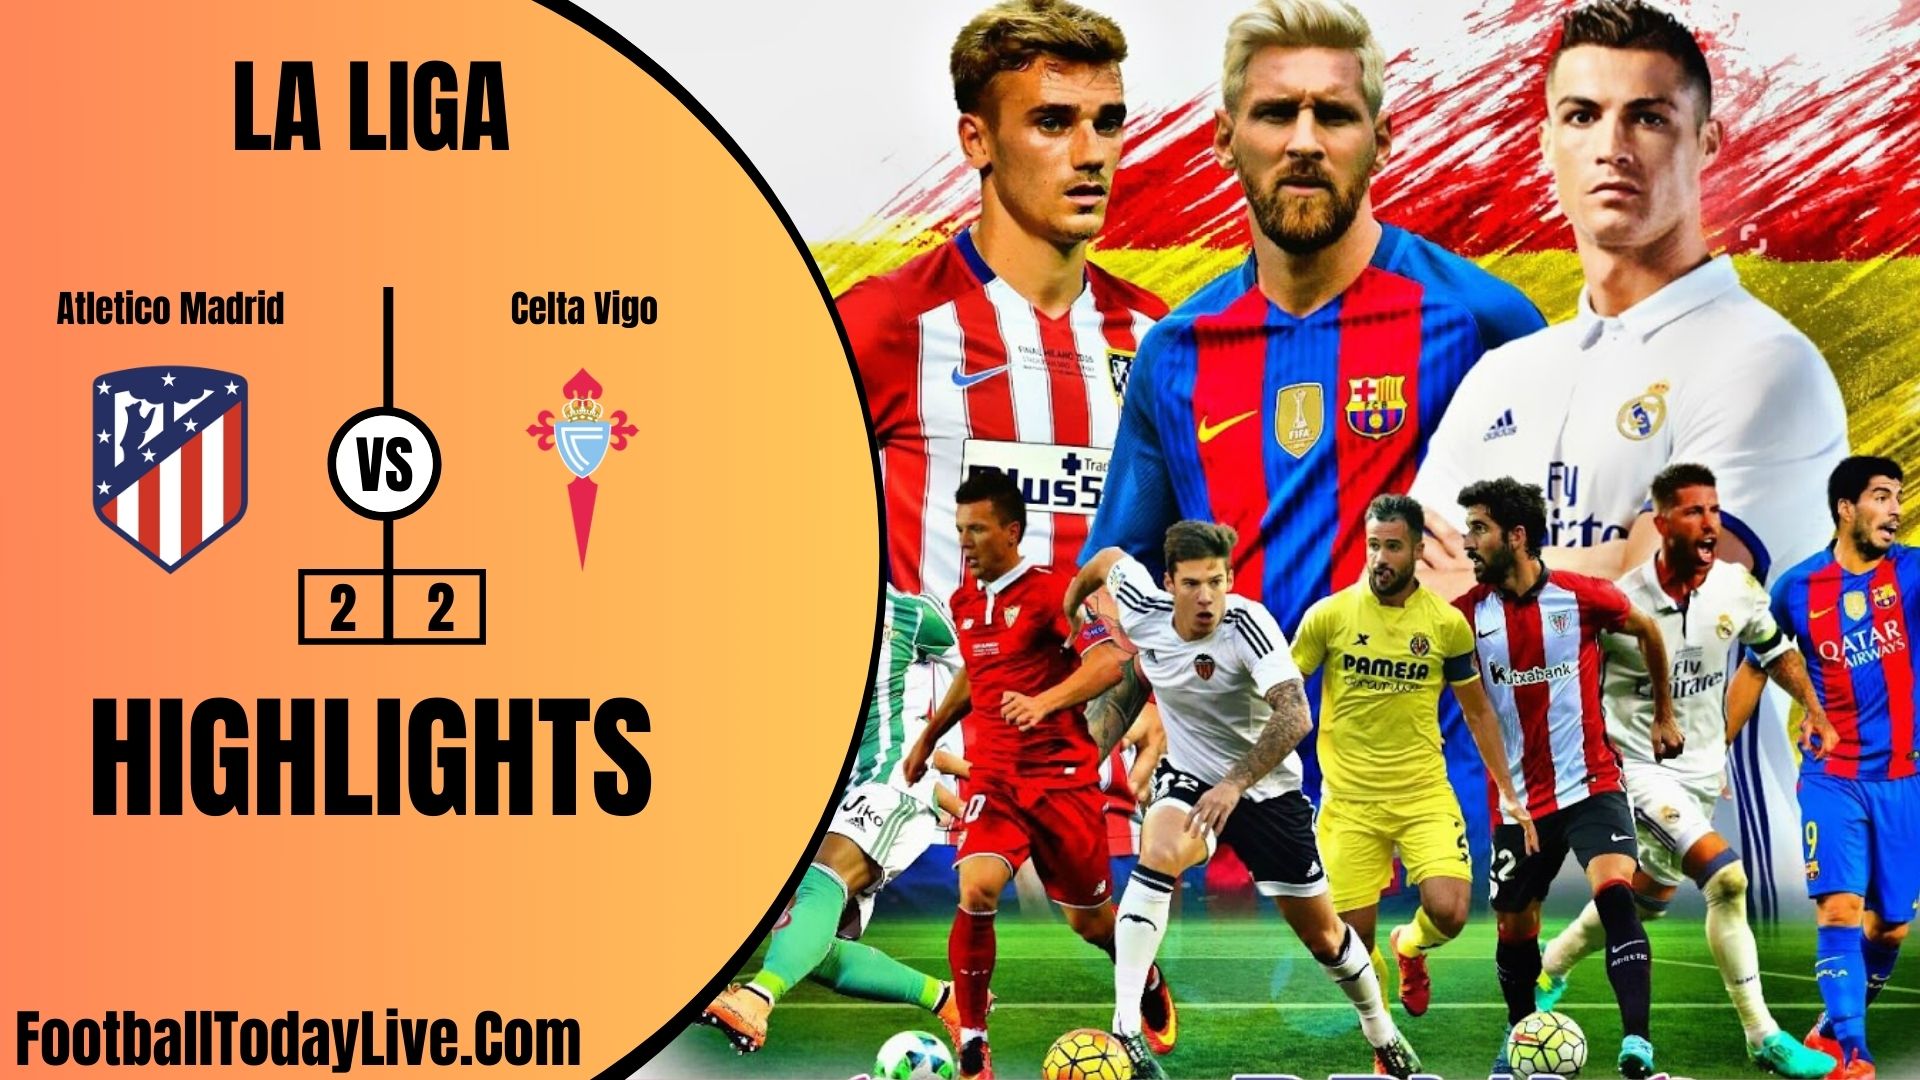 Atletico Madrid Vs Celta Vigo Highlights 2021 La Liga